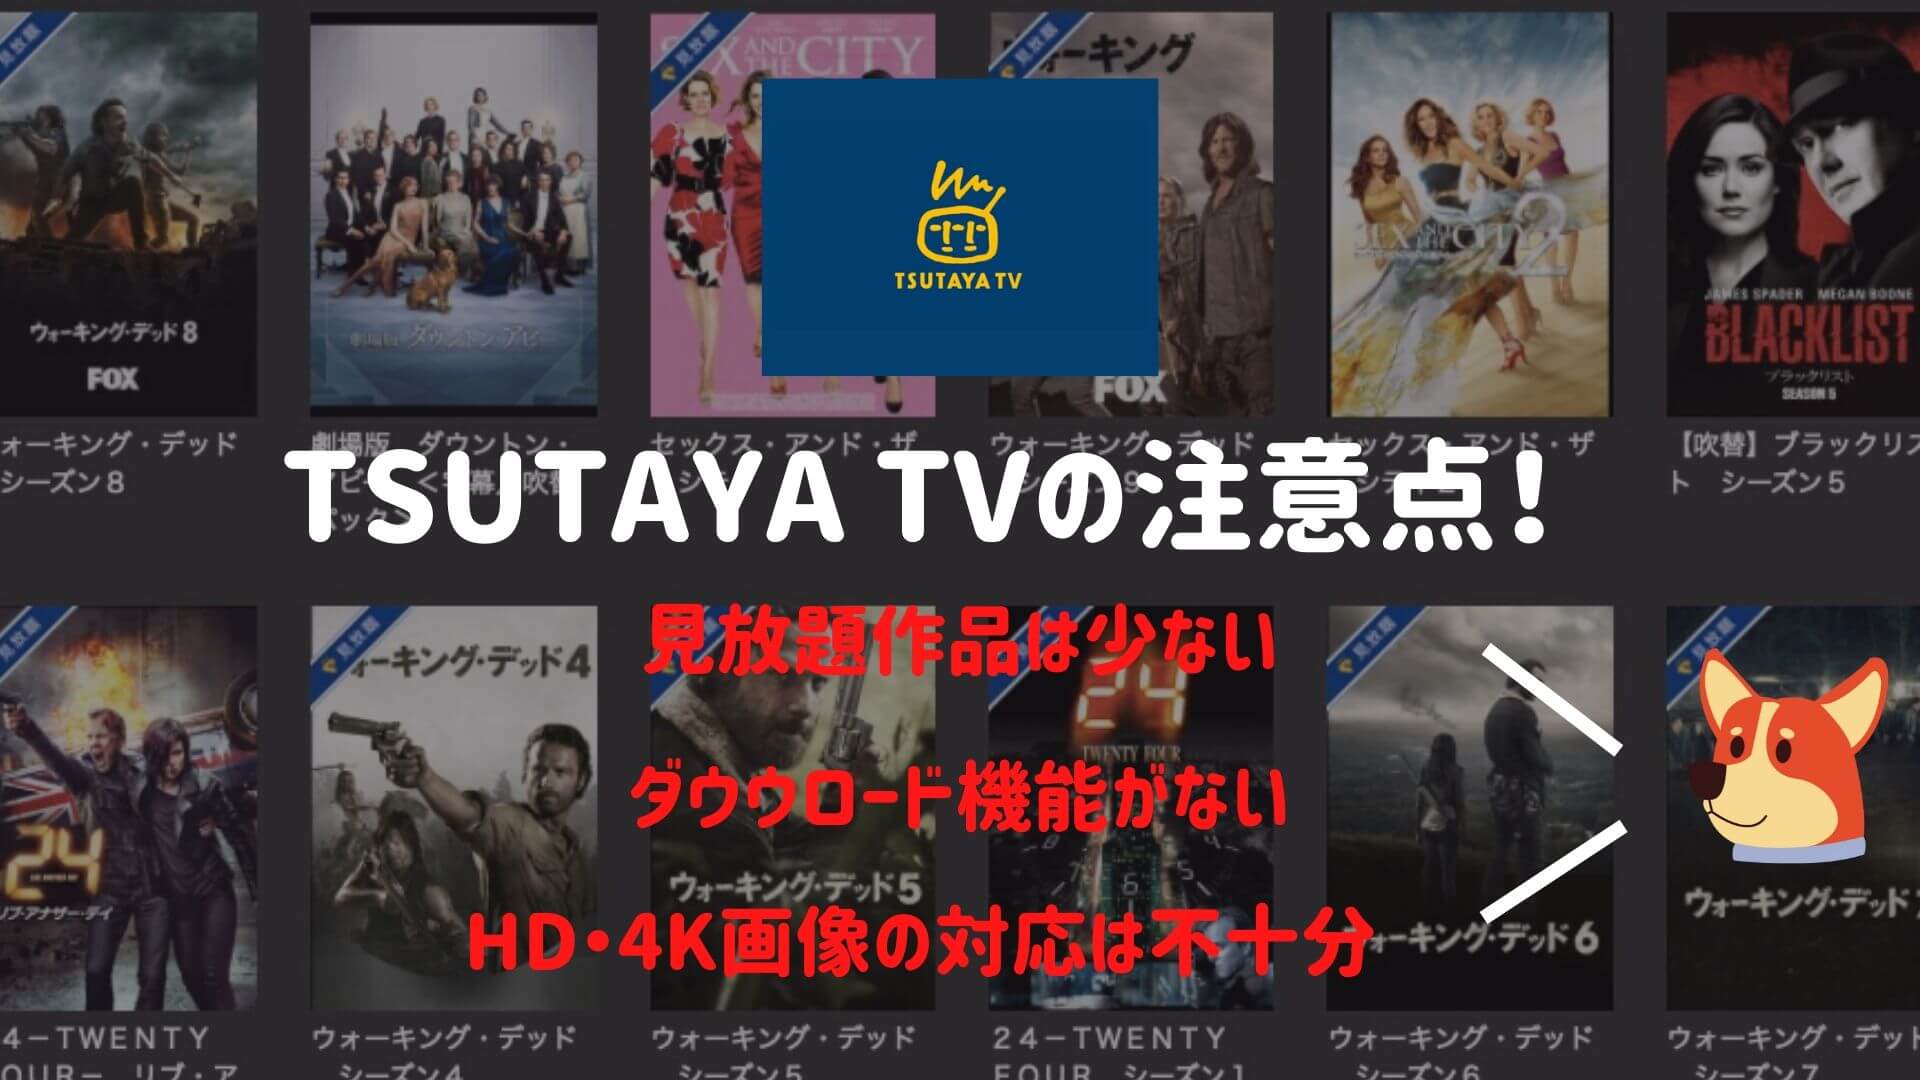 TSUTAYA TVを利用するのに注意点３つを解説している